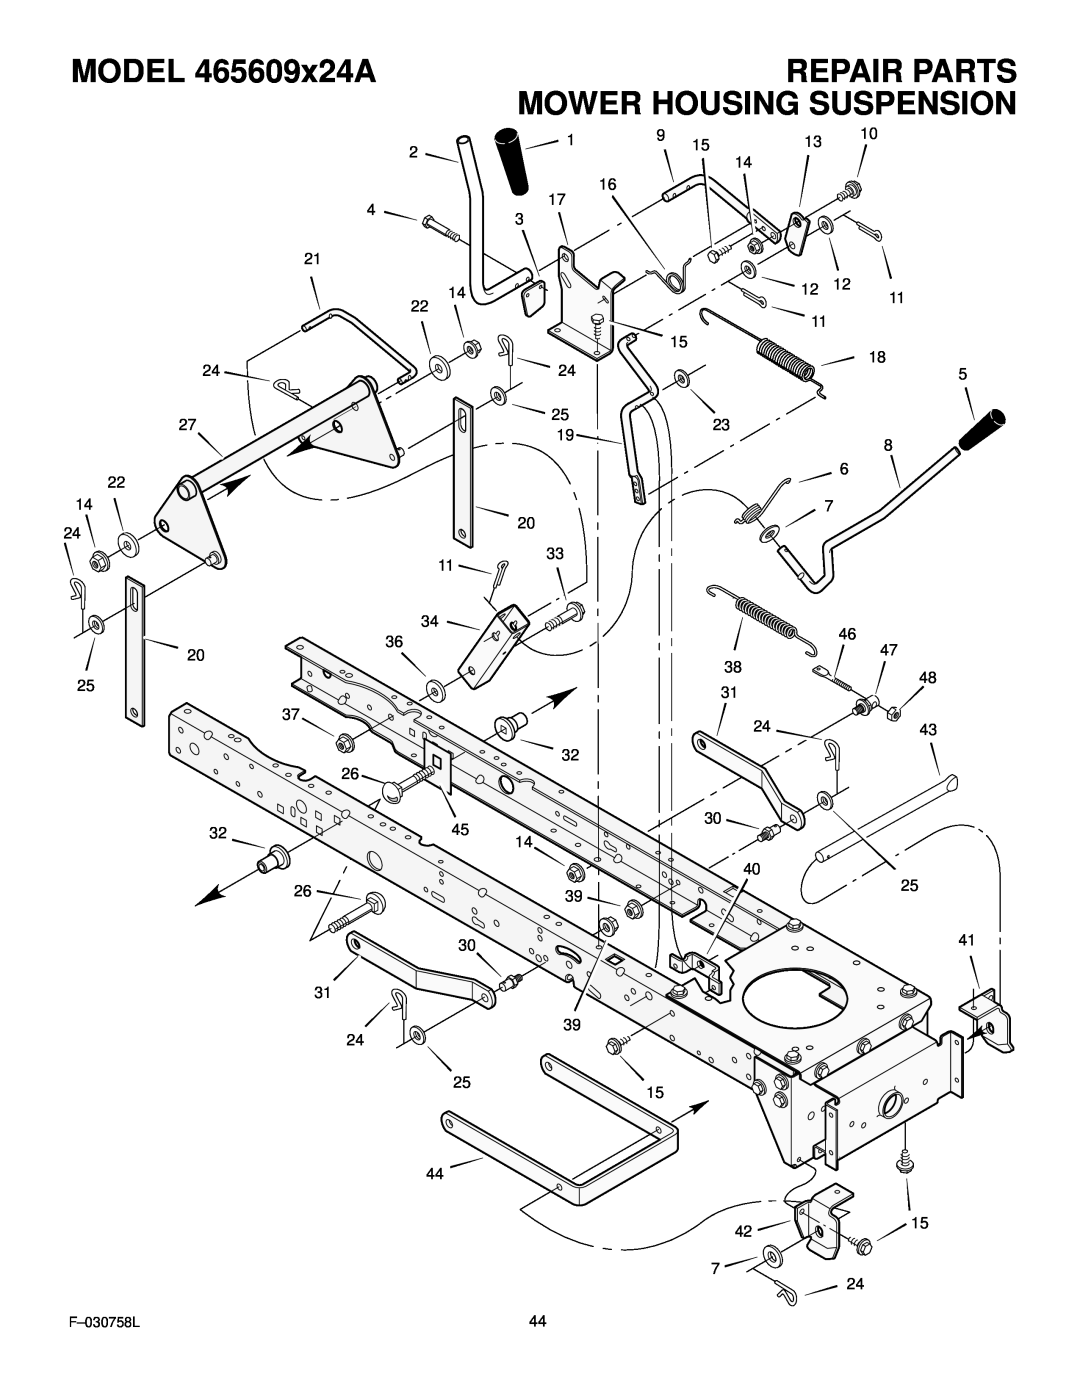 Murray manual Mower Housing Suspension, MODEL 465609x24A, Repair Parts, F-030758L 